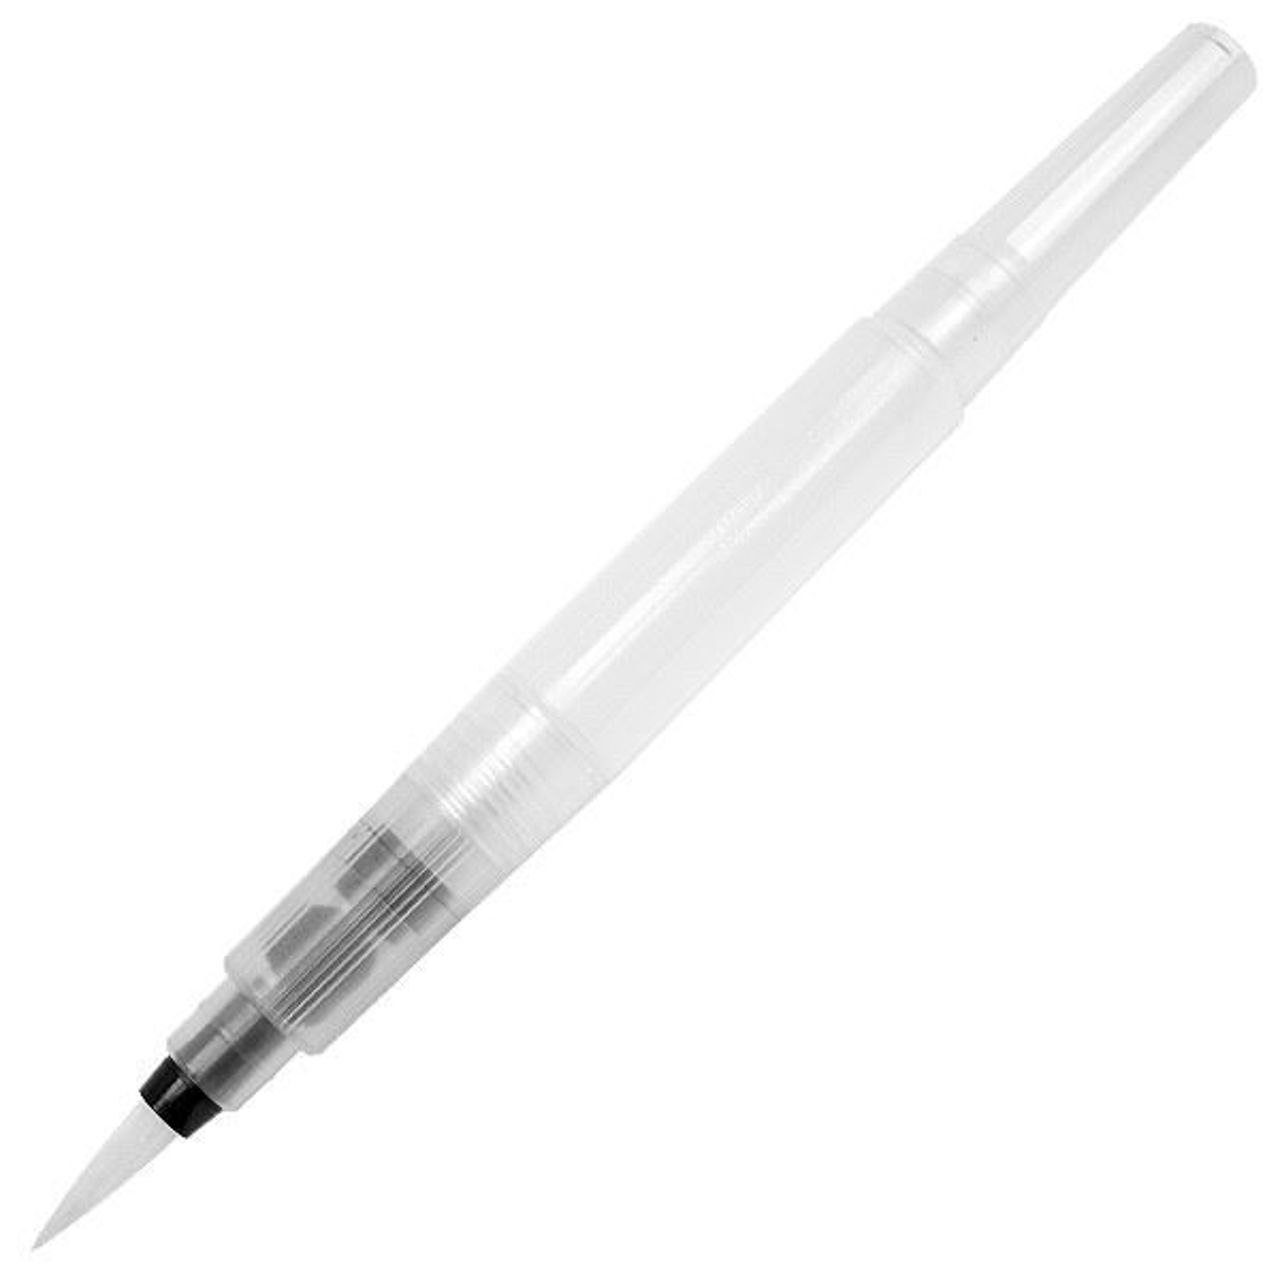 Tombow 108-Piece Dual Brush Pen Set in Marker Case